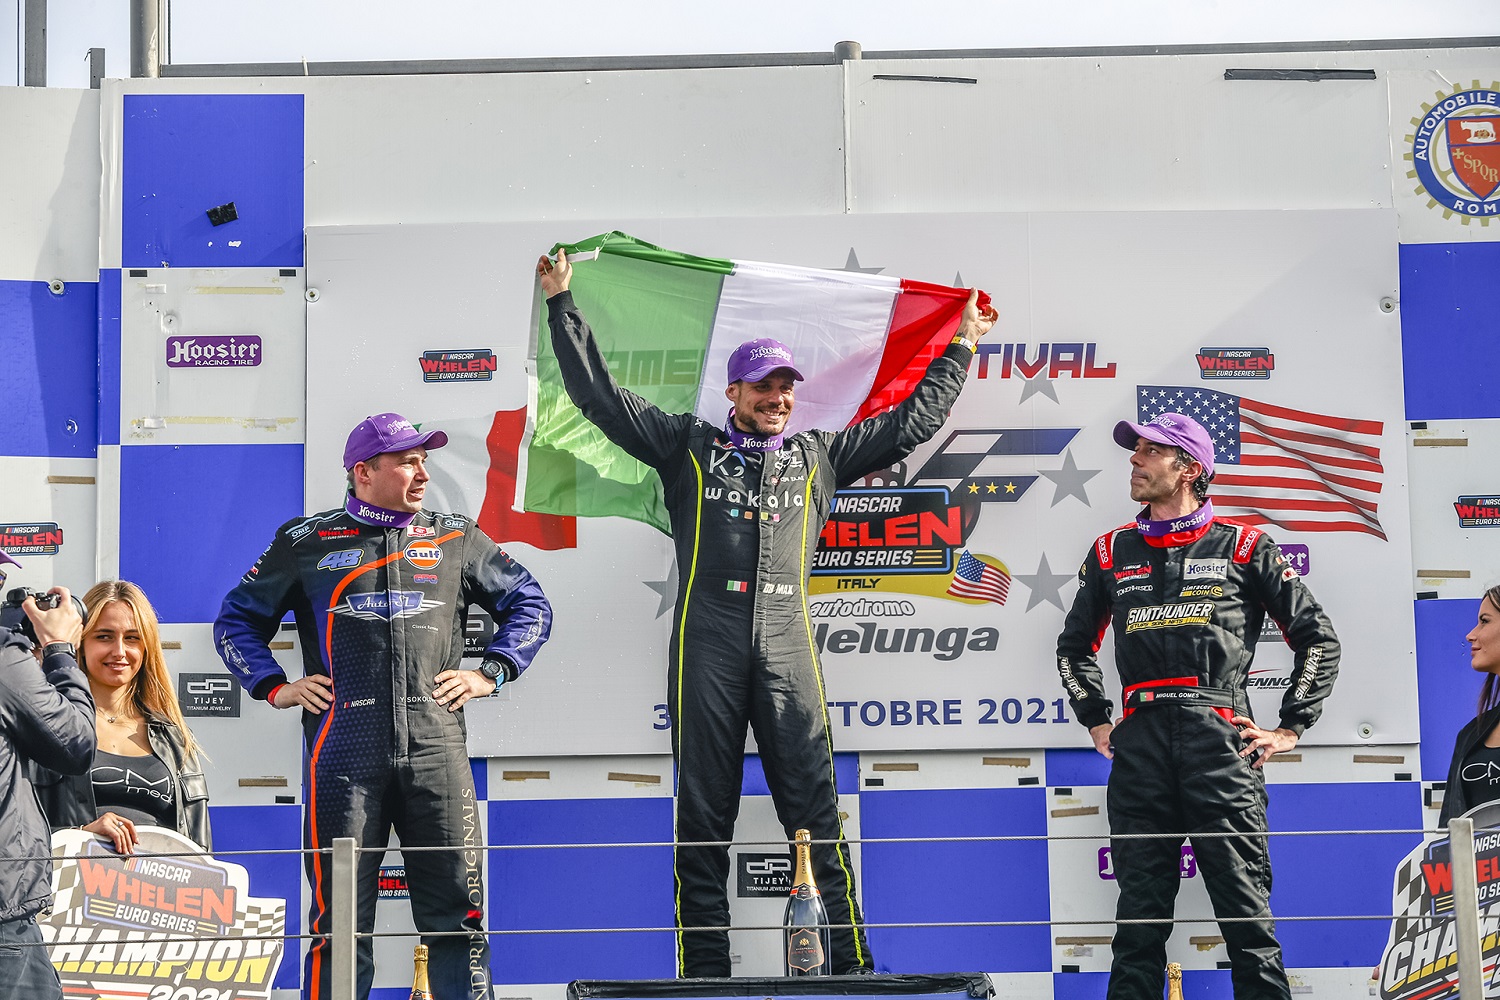 max lanza caal racing campione legend trophy euronascar nascar whelen euro series